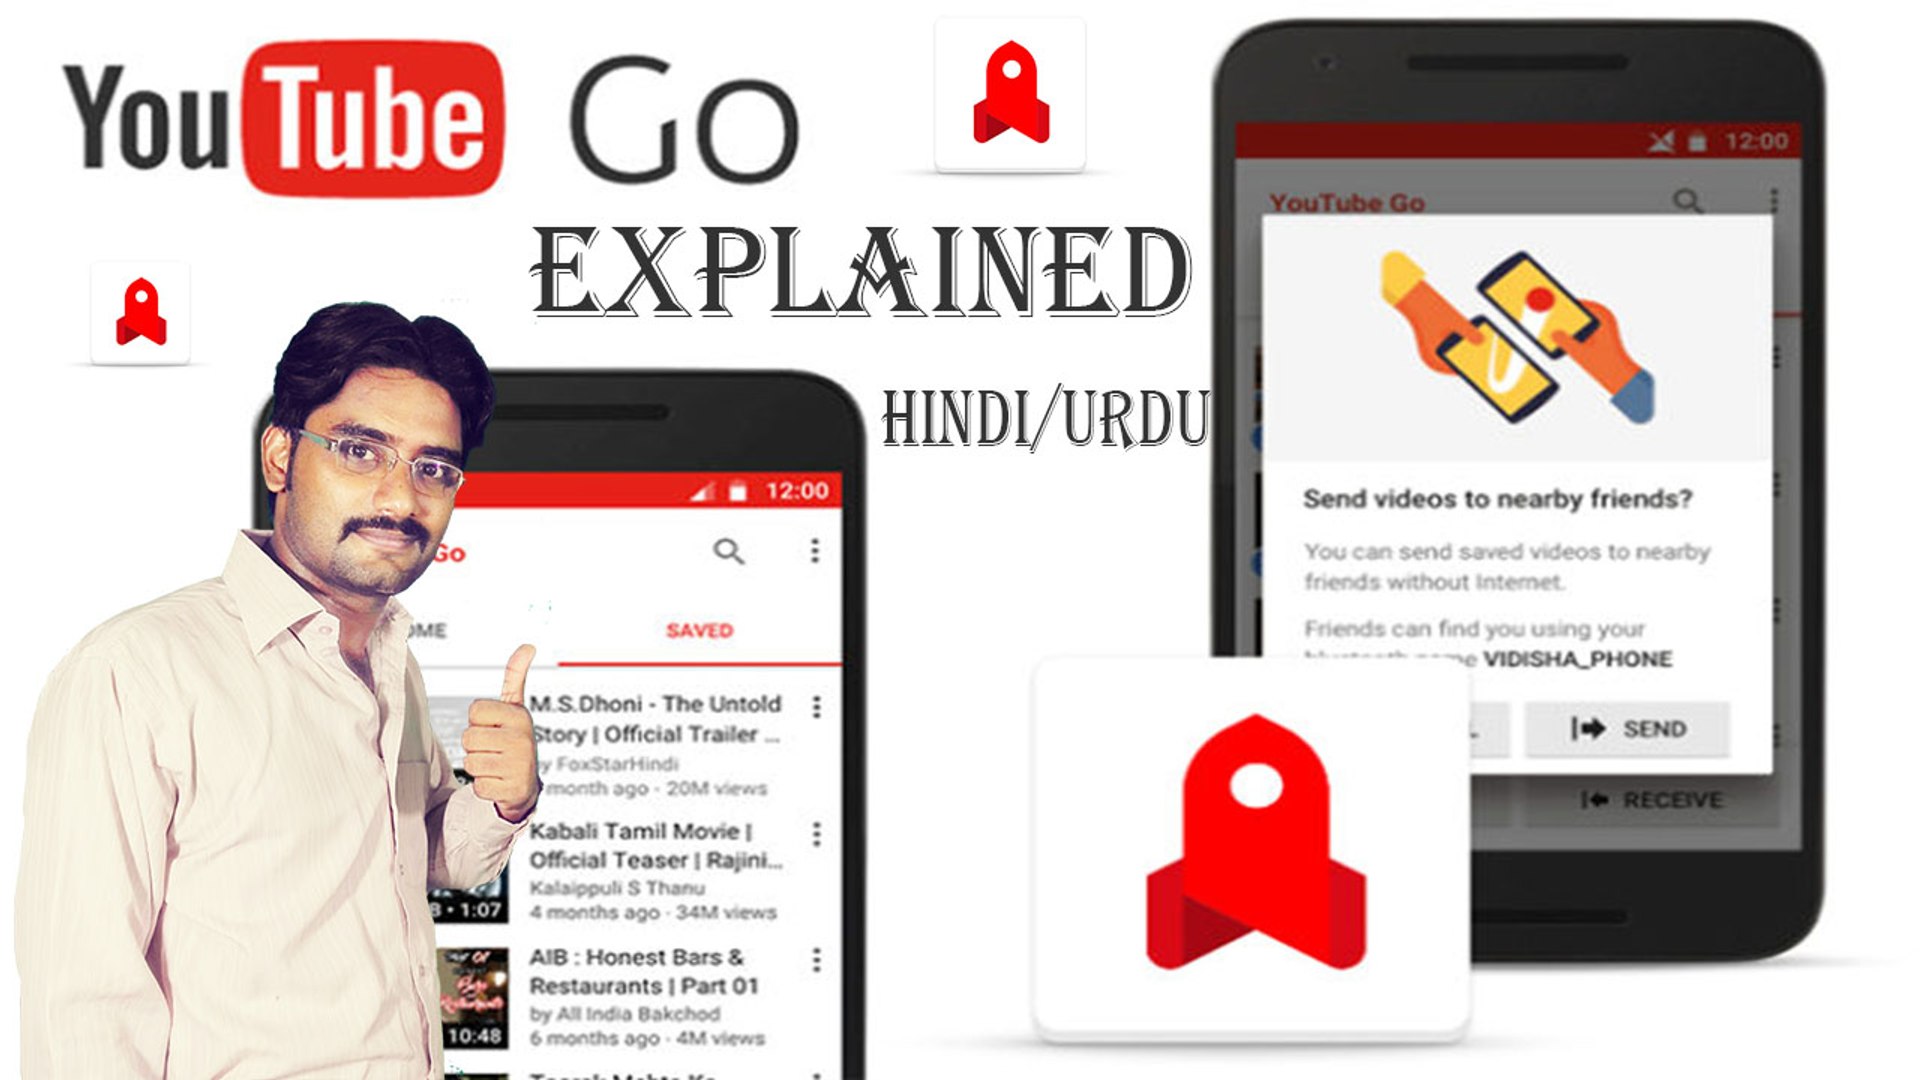 Youtube Announce Latest App YOUTUBE GO Explained in [Hindi/Urdu]